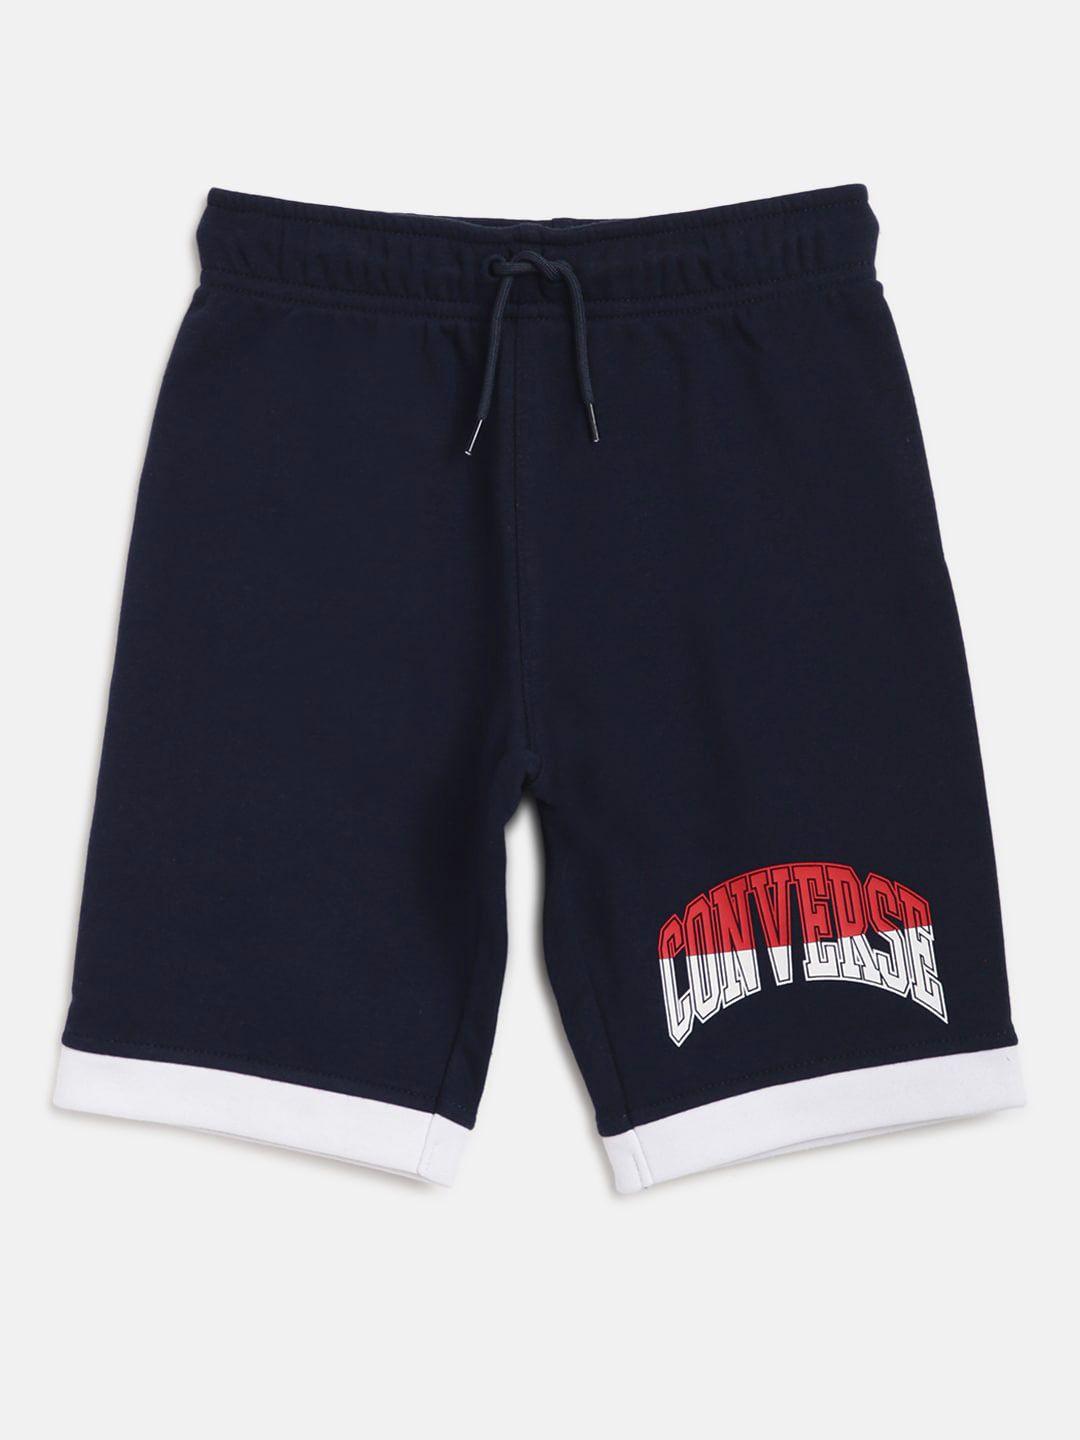 converse-boys-navy-blue-solid-shorts